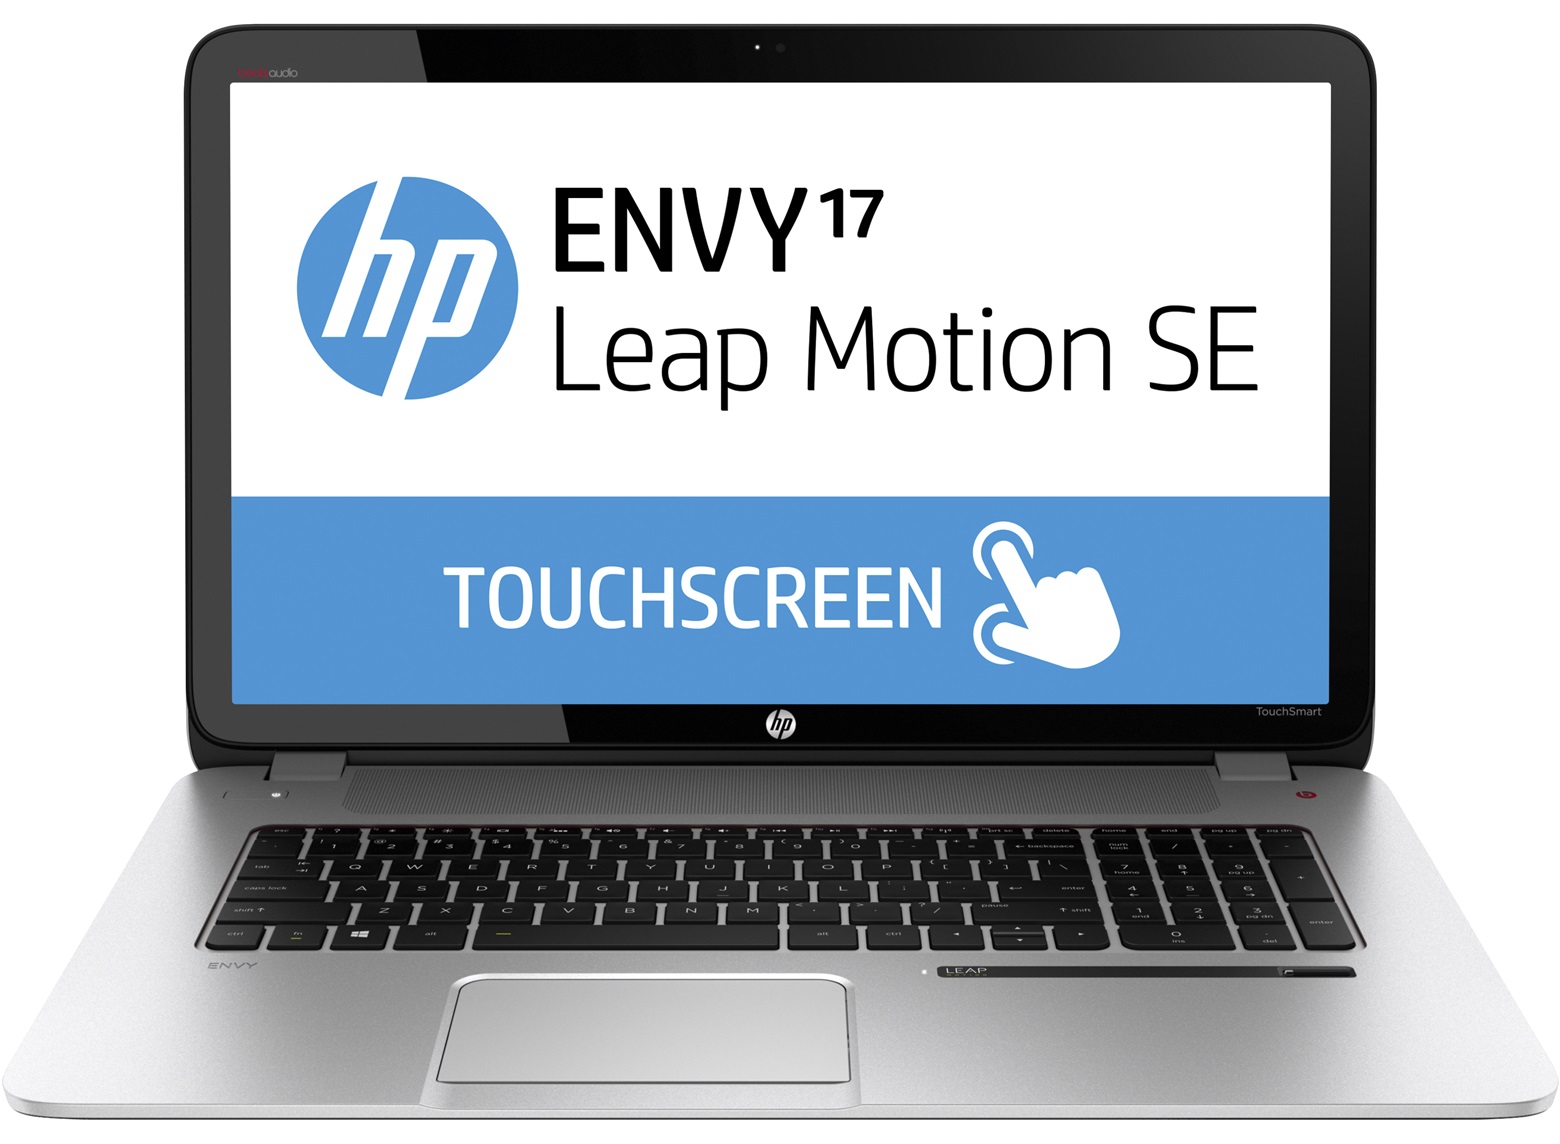 HP Envy17 Leap Motion SE